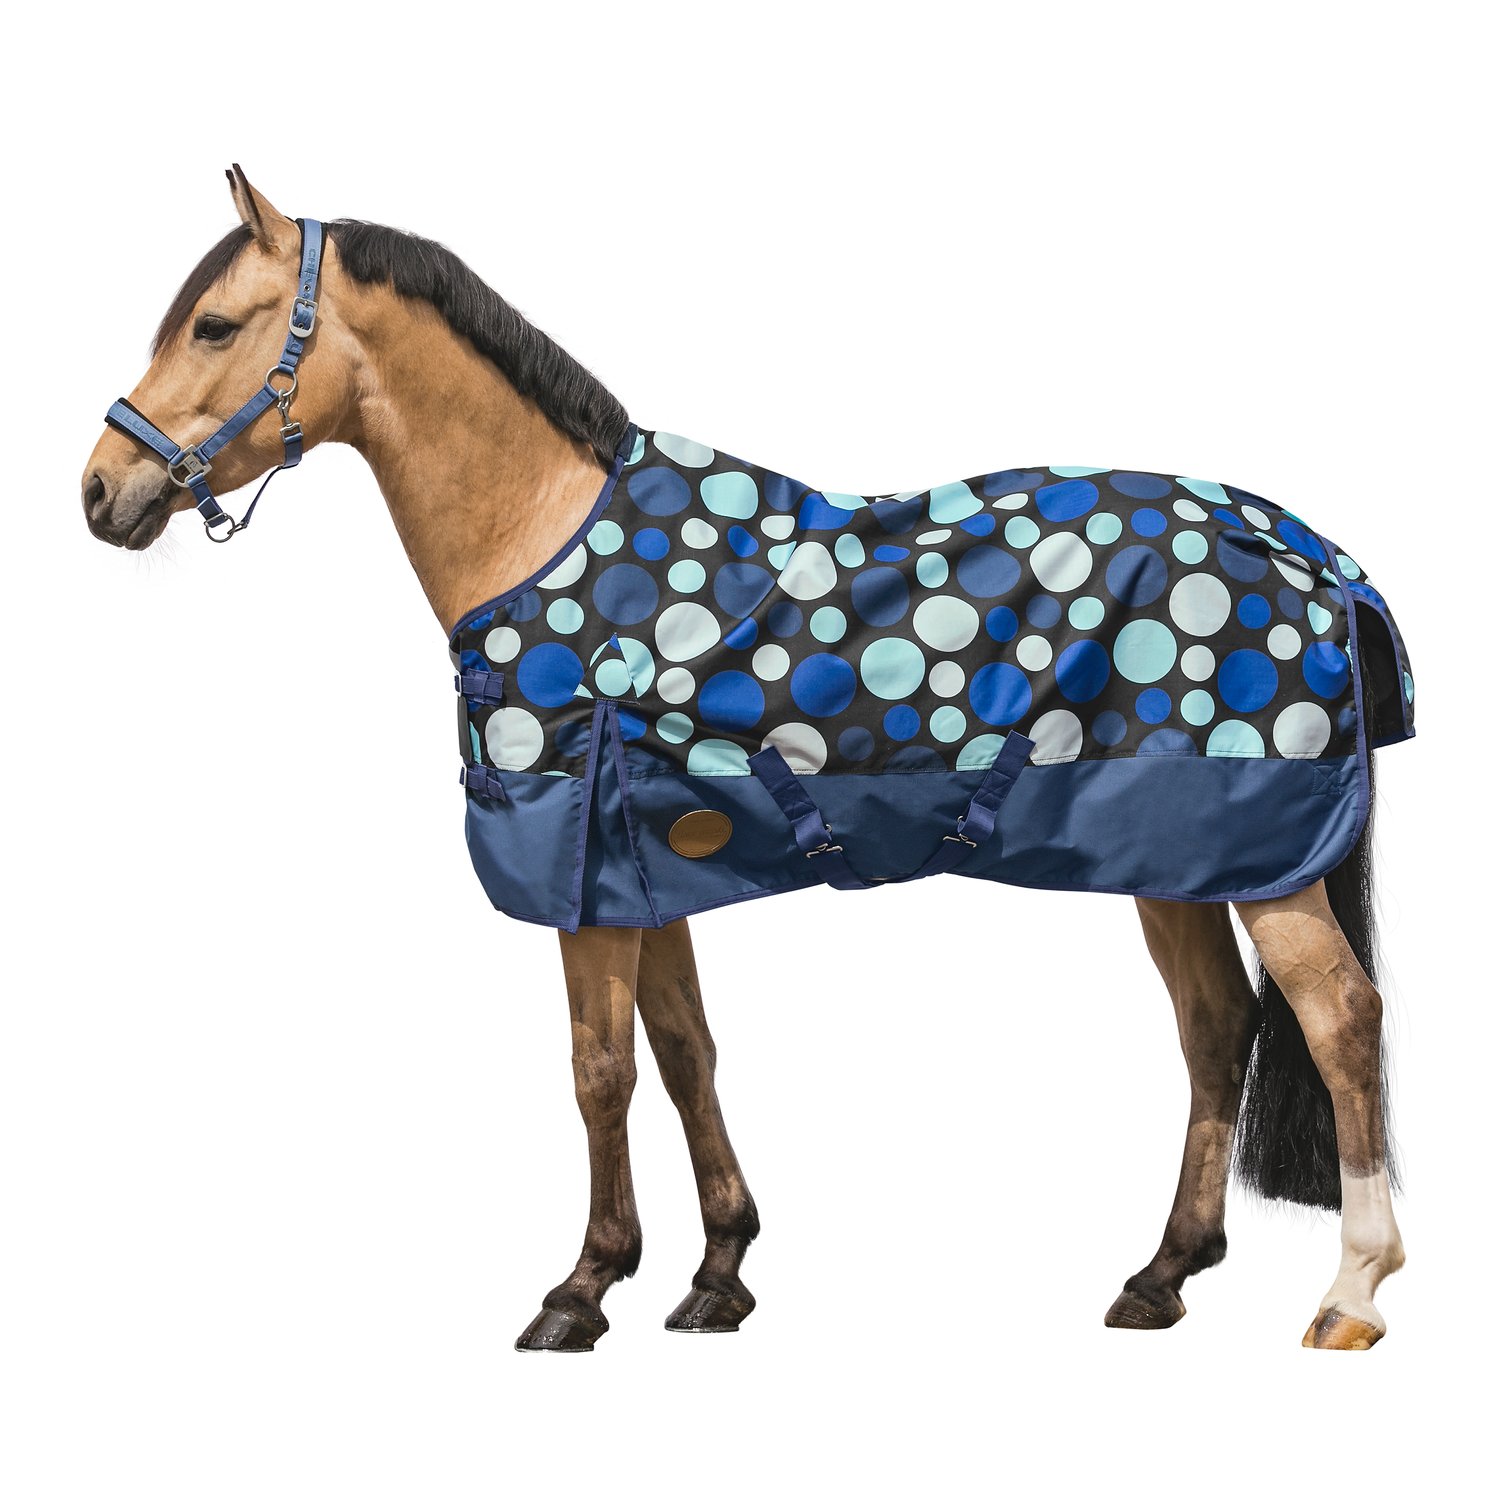 Horse-friends Outdoordecke Pony blue dots | 85 cm